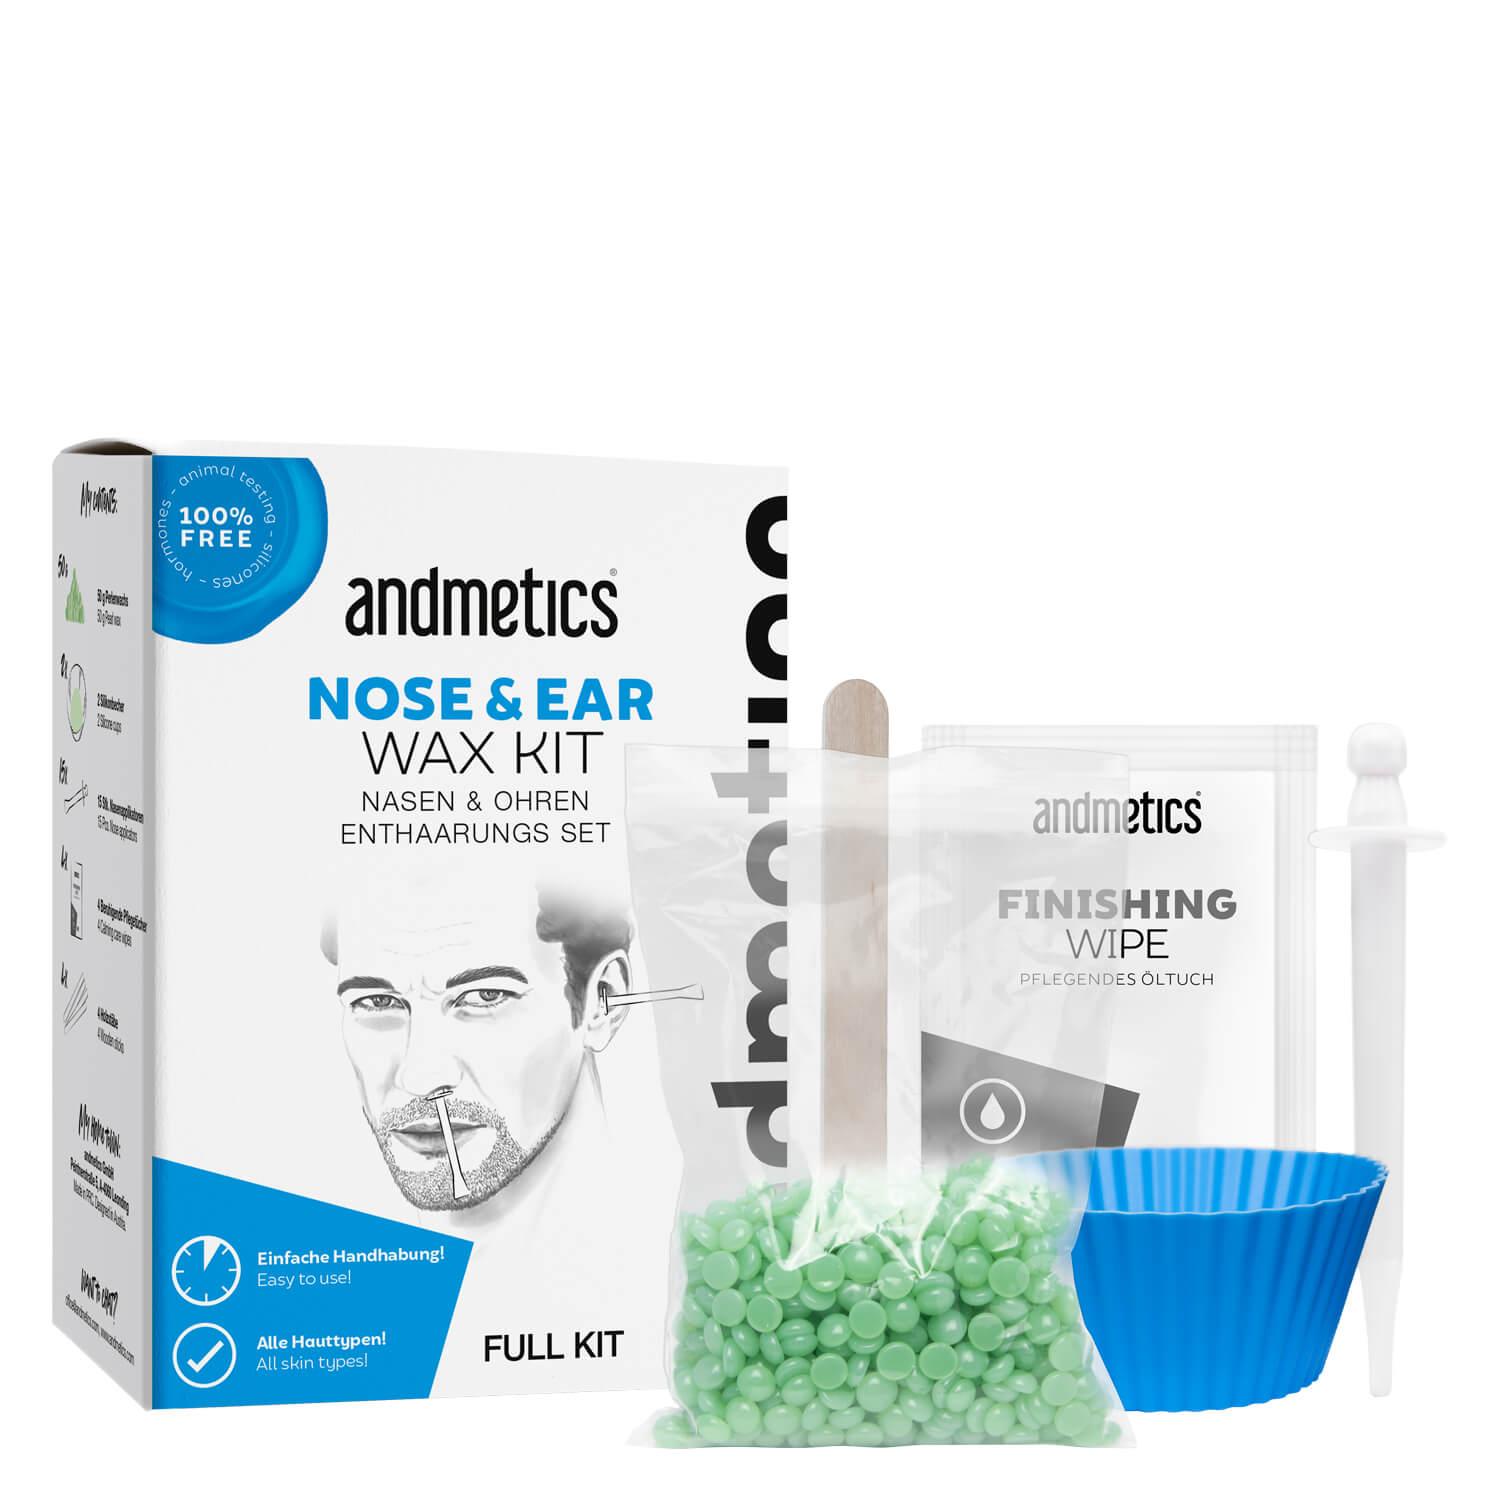 andmetics - Nose & Ear Wax Kit